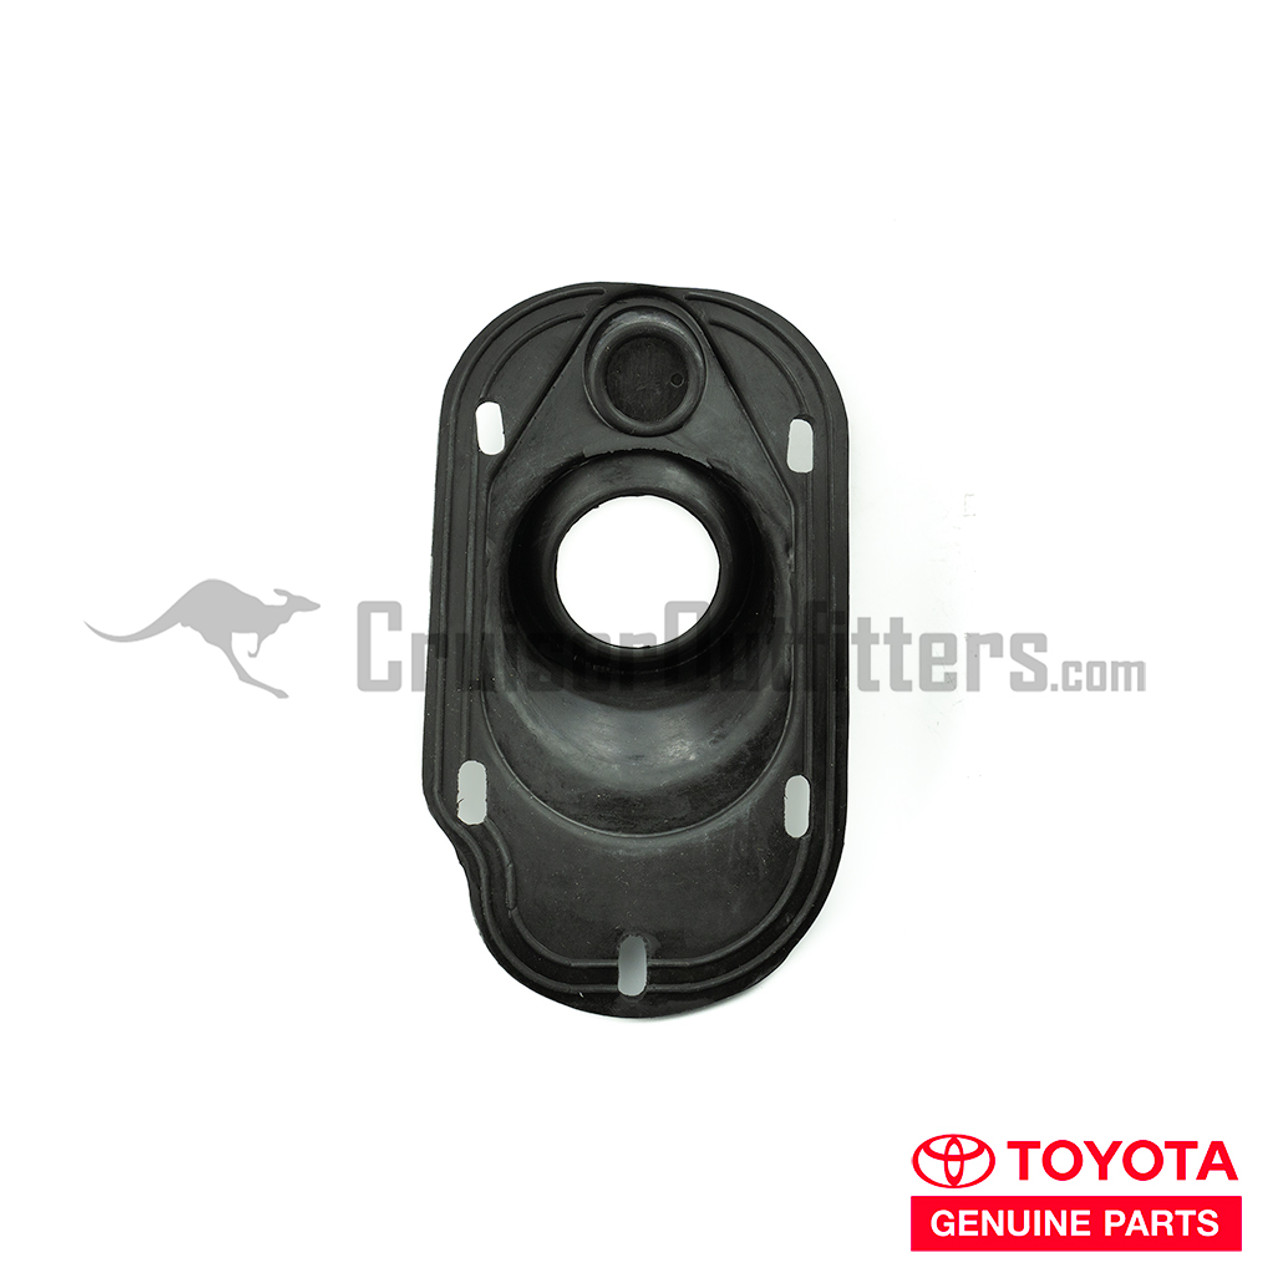 Steering Column Boot - OEM Toyota - Fits (INTST60021)